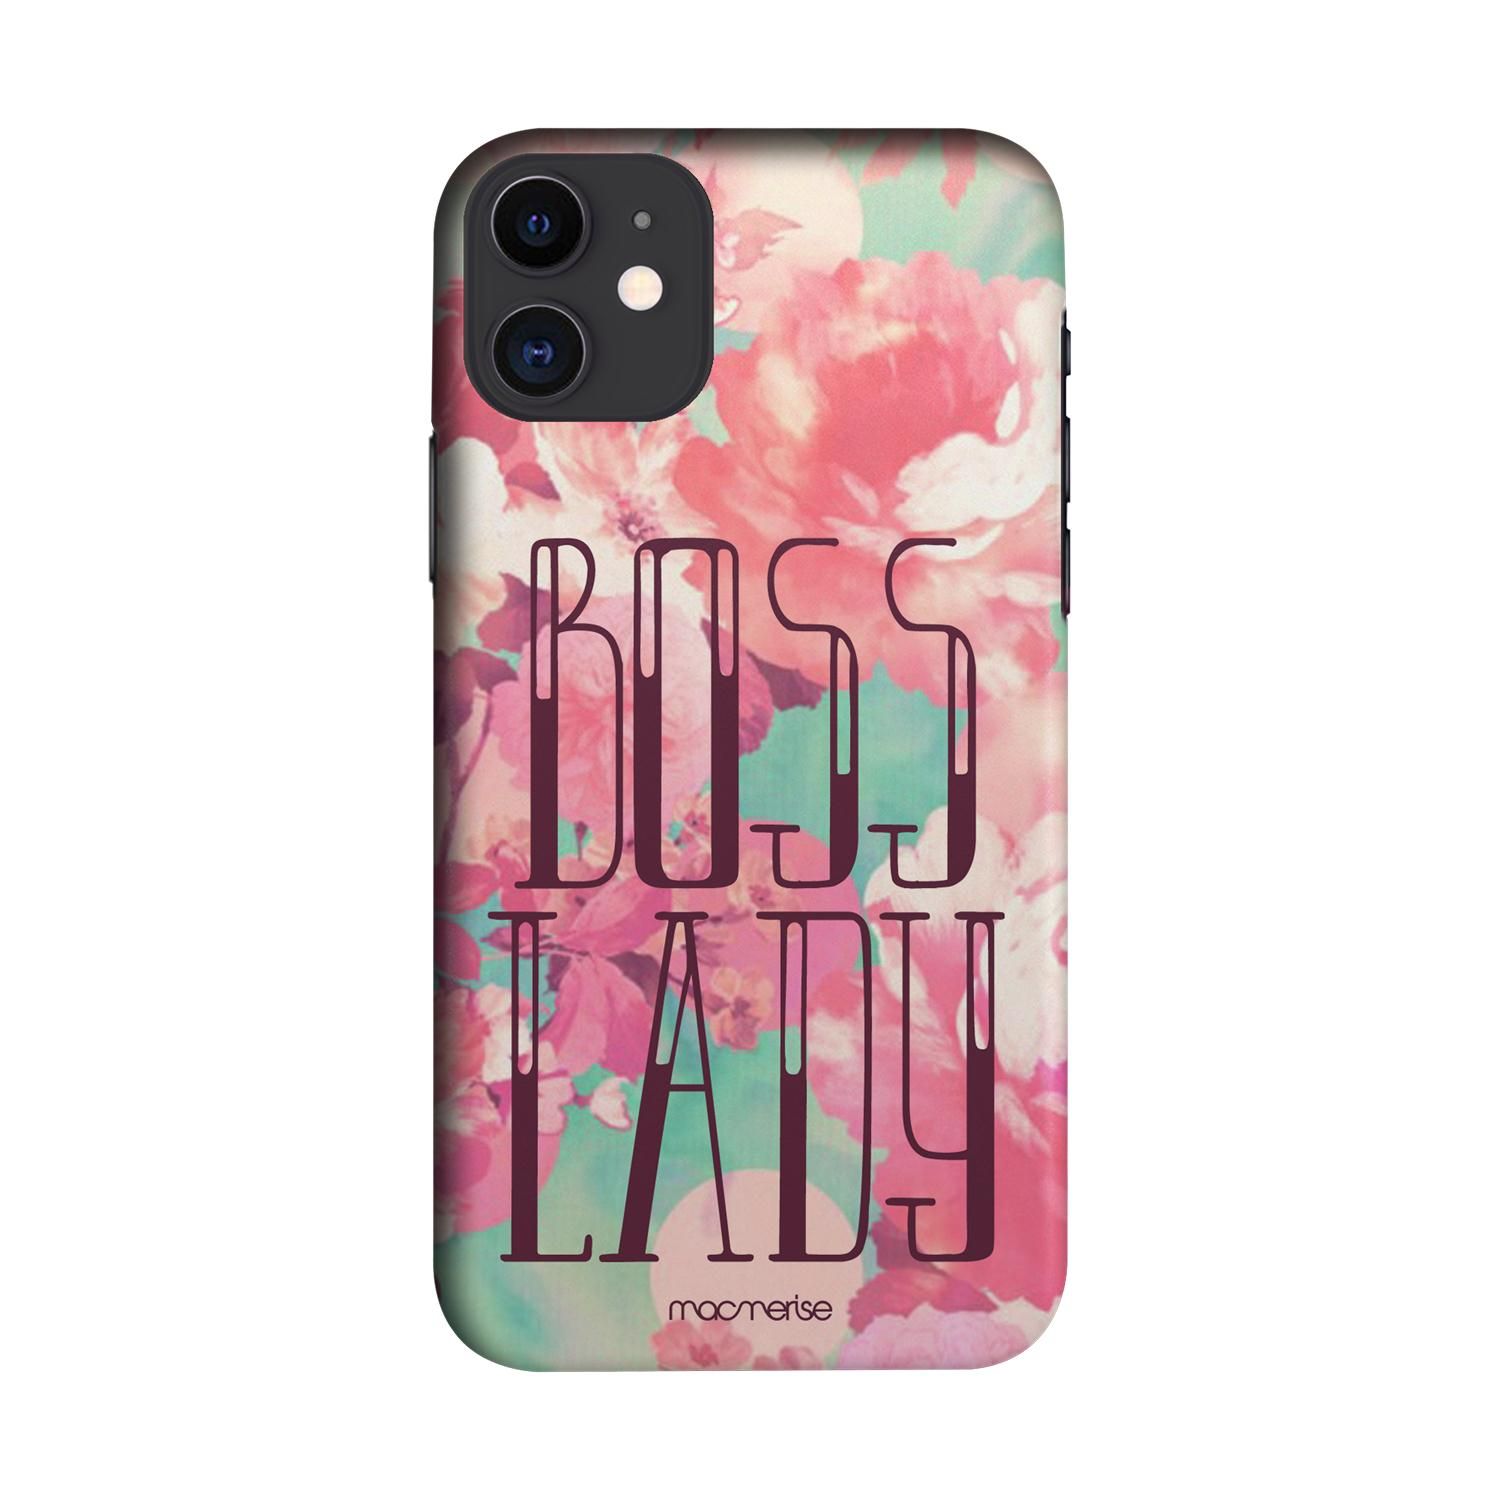 Buy Boss Lady - Sleek Phone Case for iPhone 11 Online